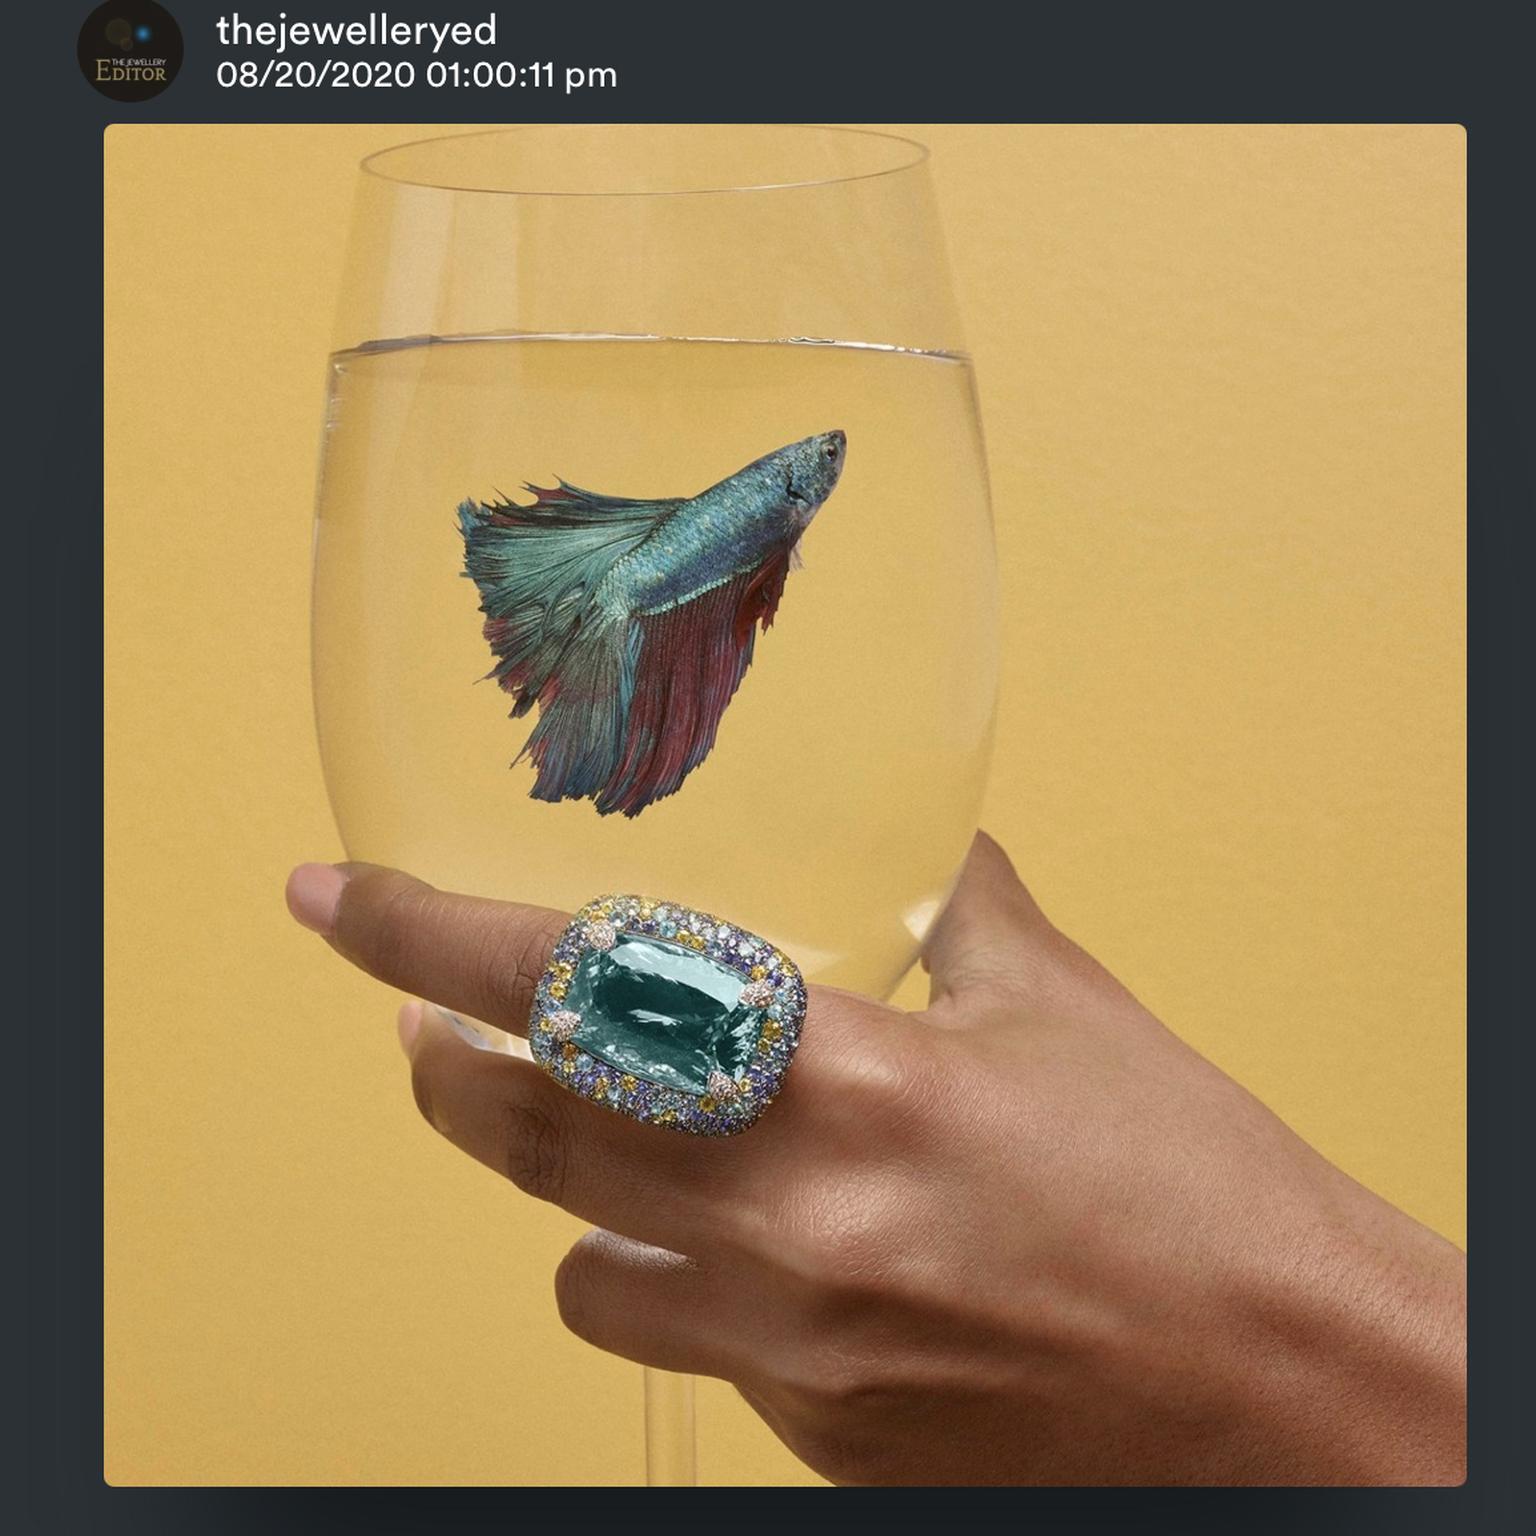 The Jewellery Editor's Top 10 Instagram posts of 2020